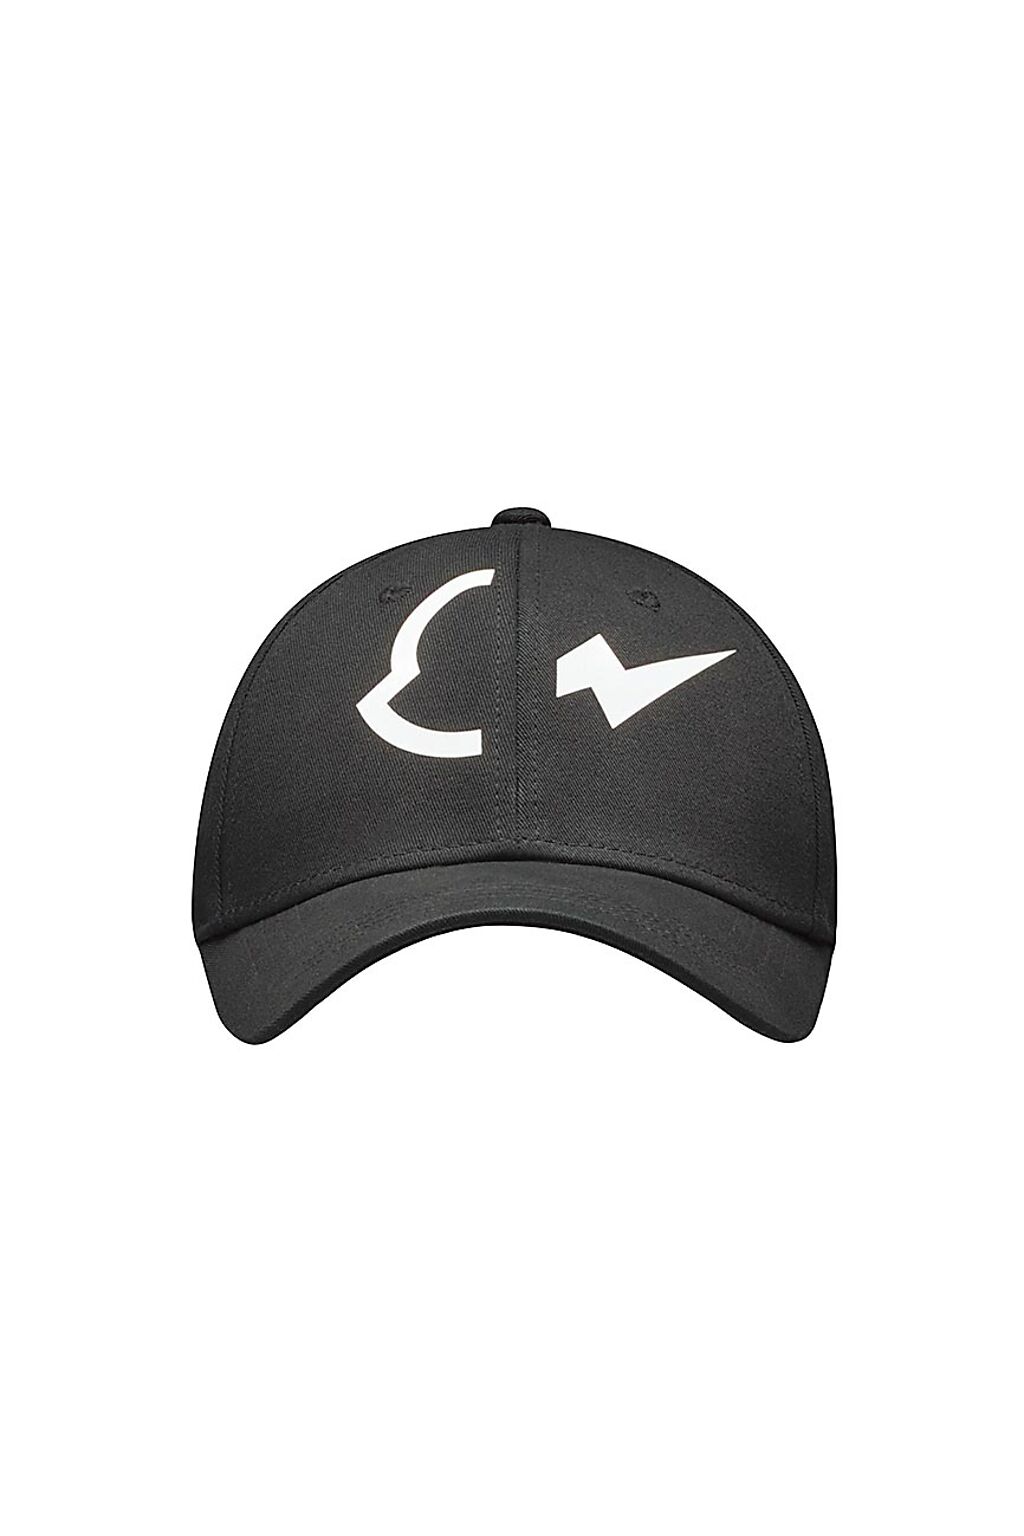 Moncler Logo棒球帽6600元。（Moncler提供）